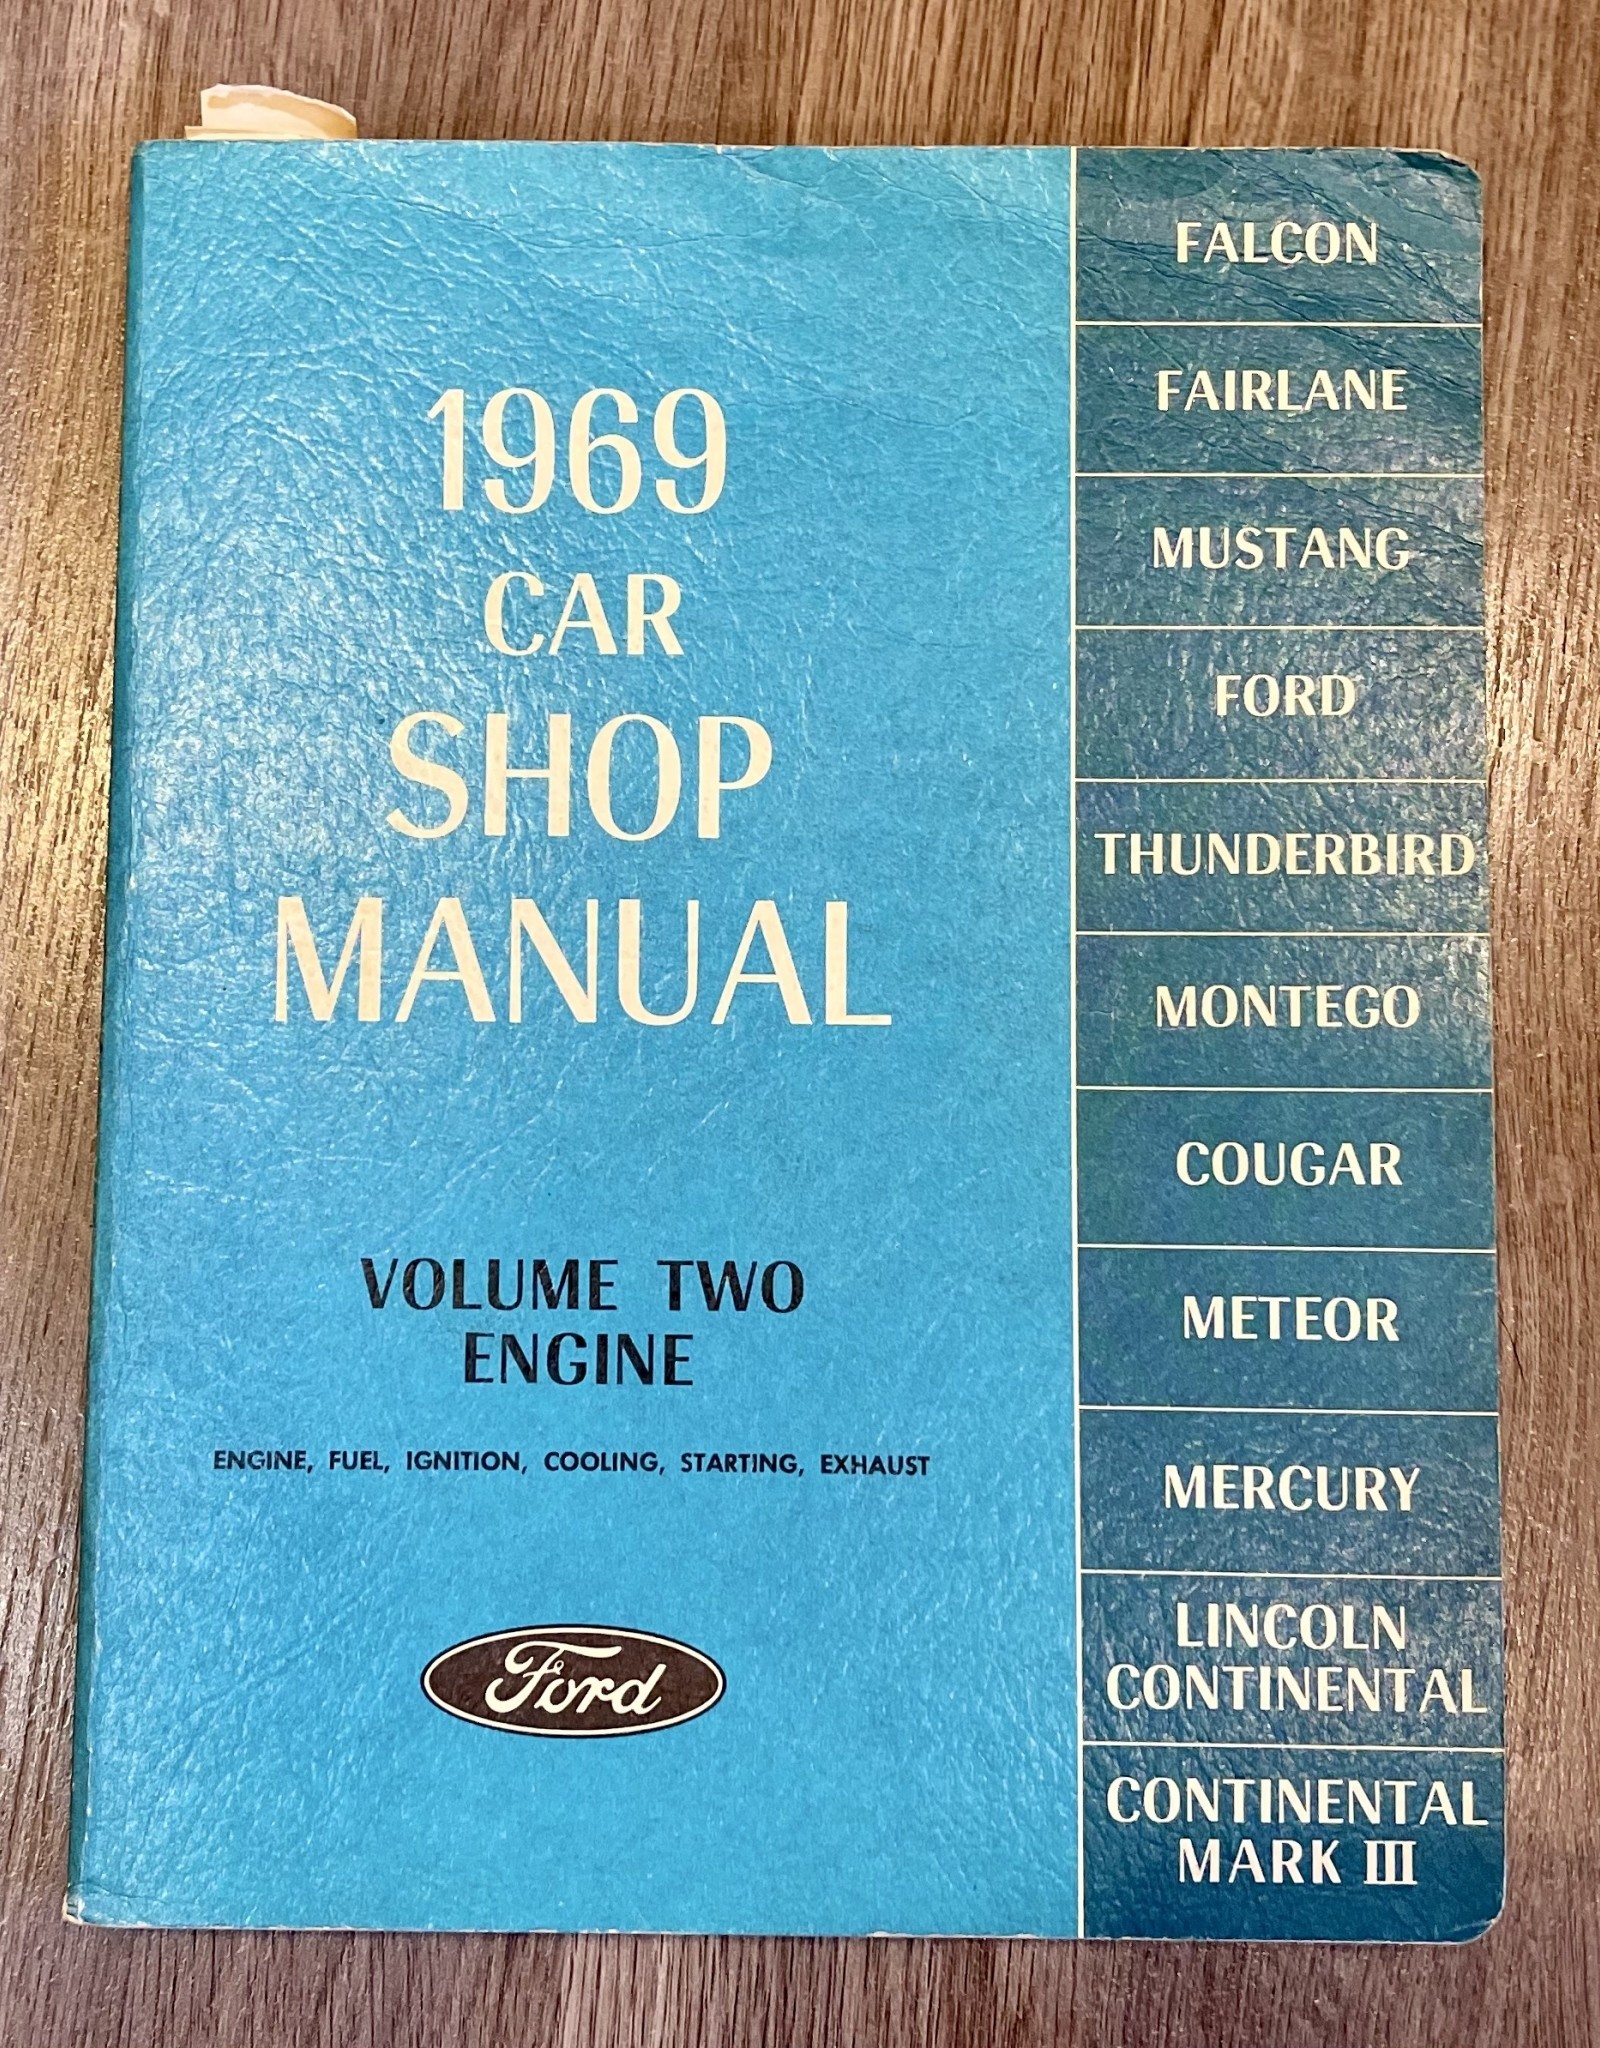 Purple Pigeon Treasures 1969 Car Shop Manual Ford 5 Volumes with original shipping box